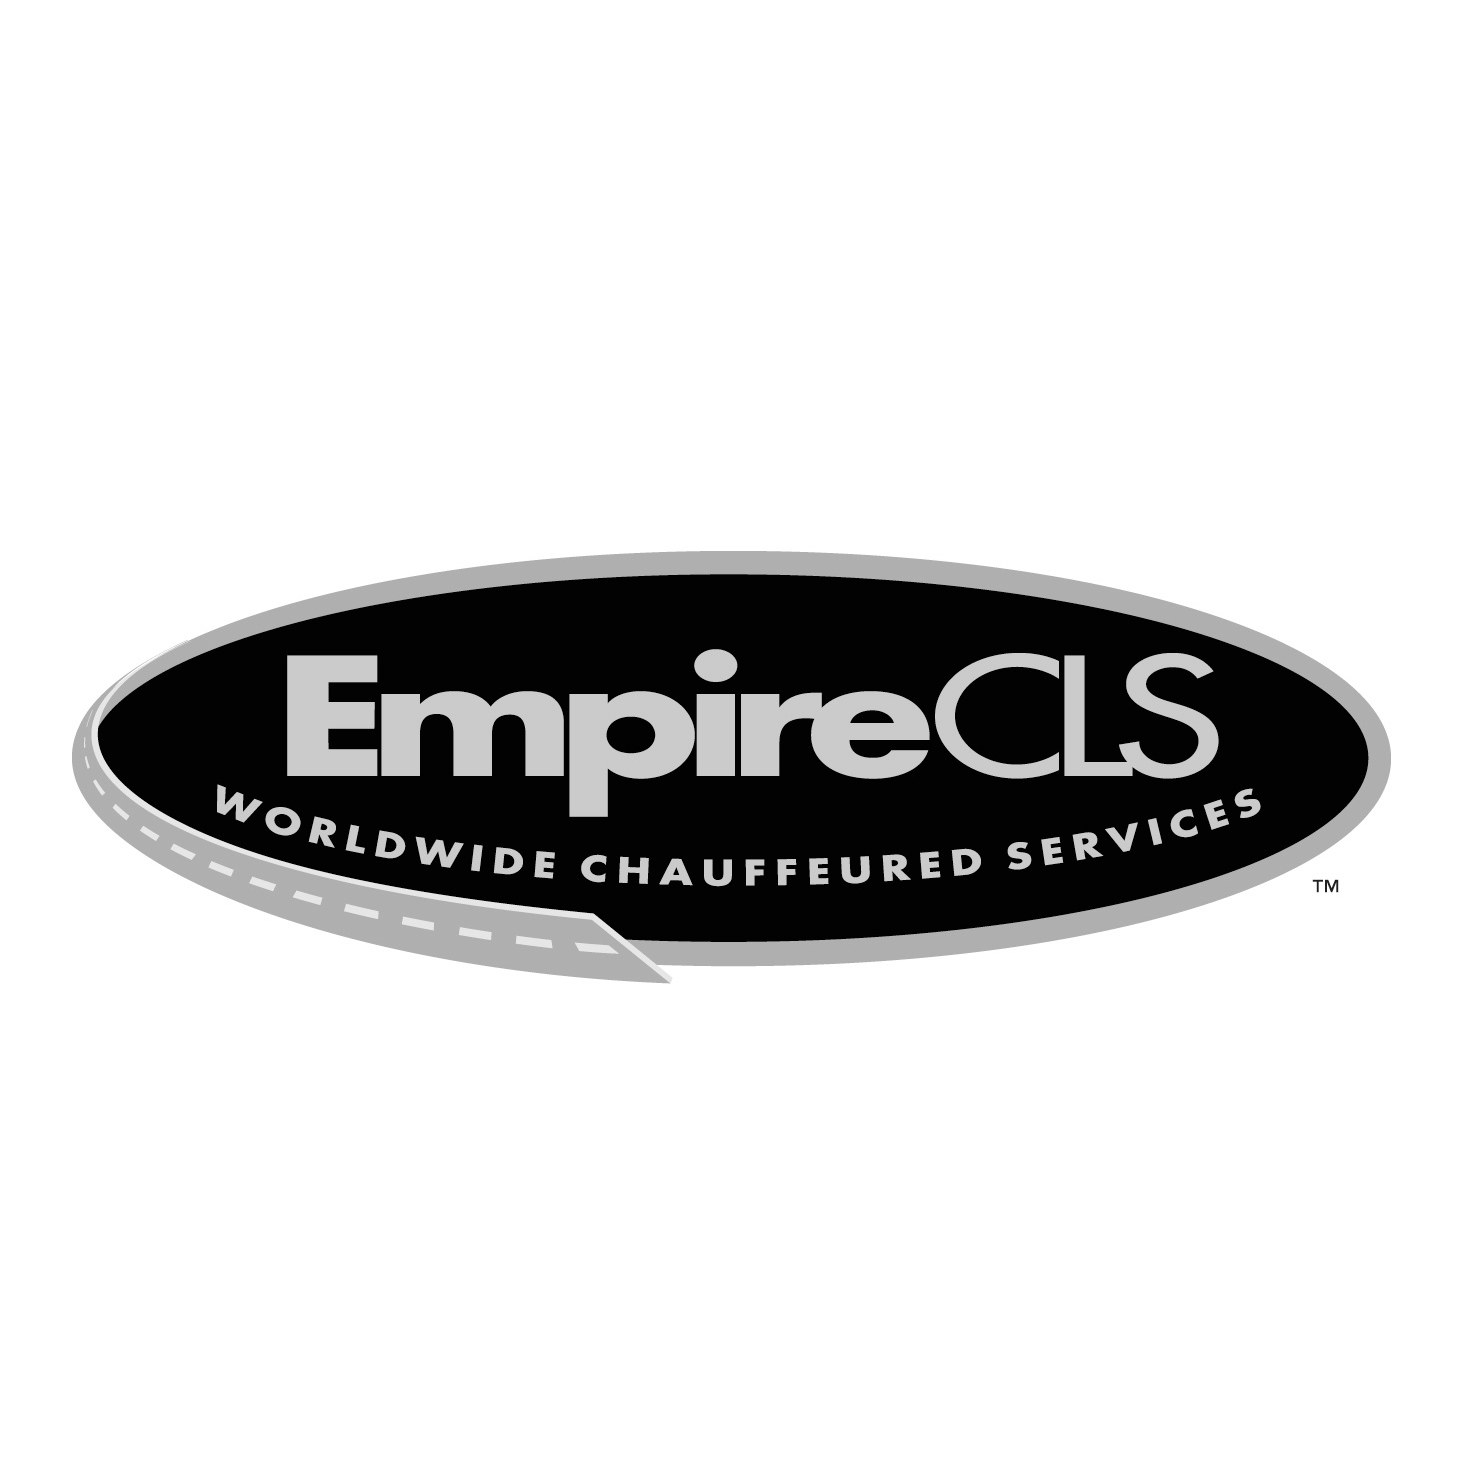 EmpireCLS Worldwide Chauffeured Services